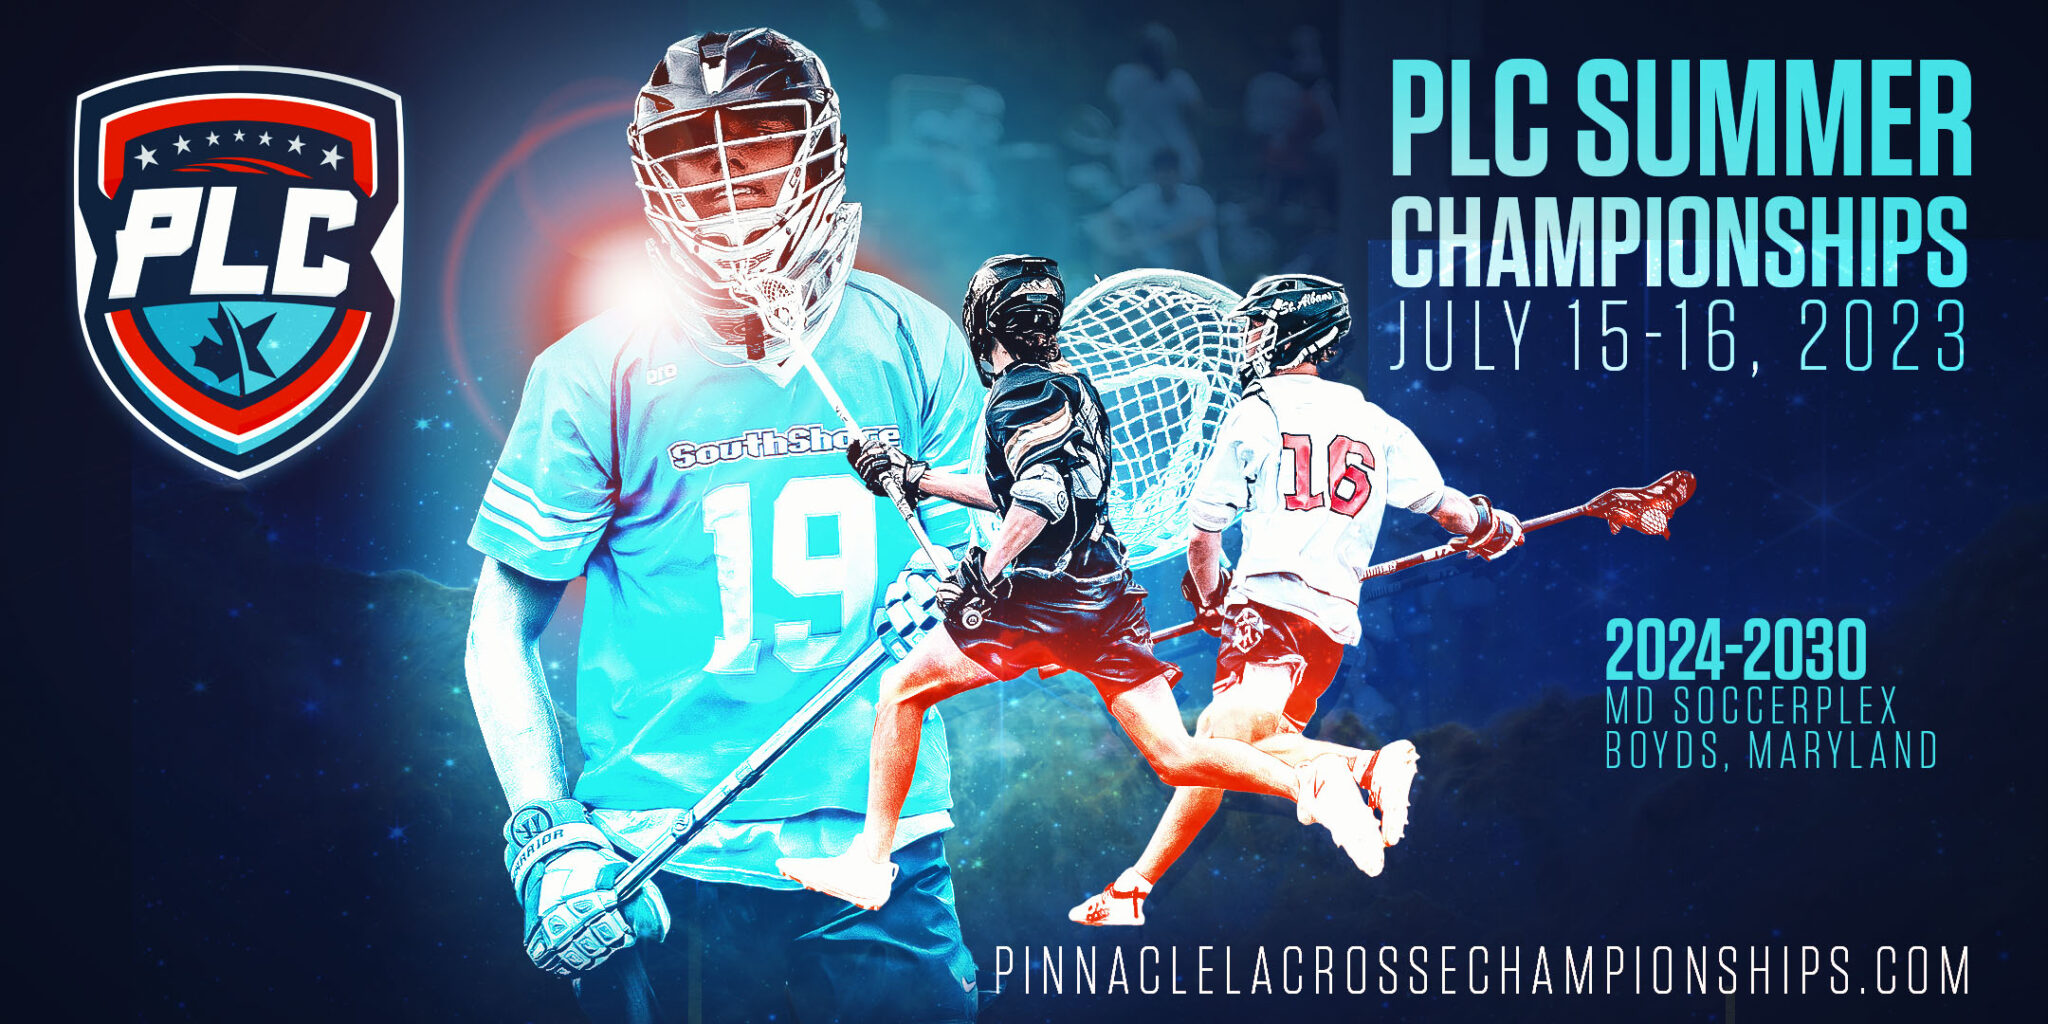 PLC Summer Championships Pinnacle Lacrosse Championships